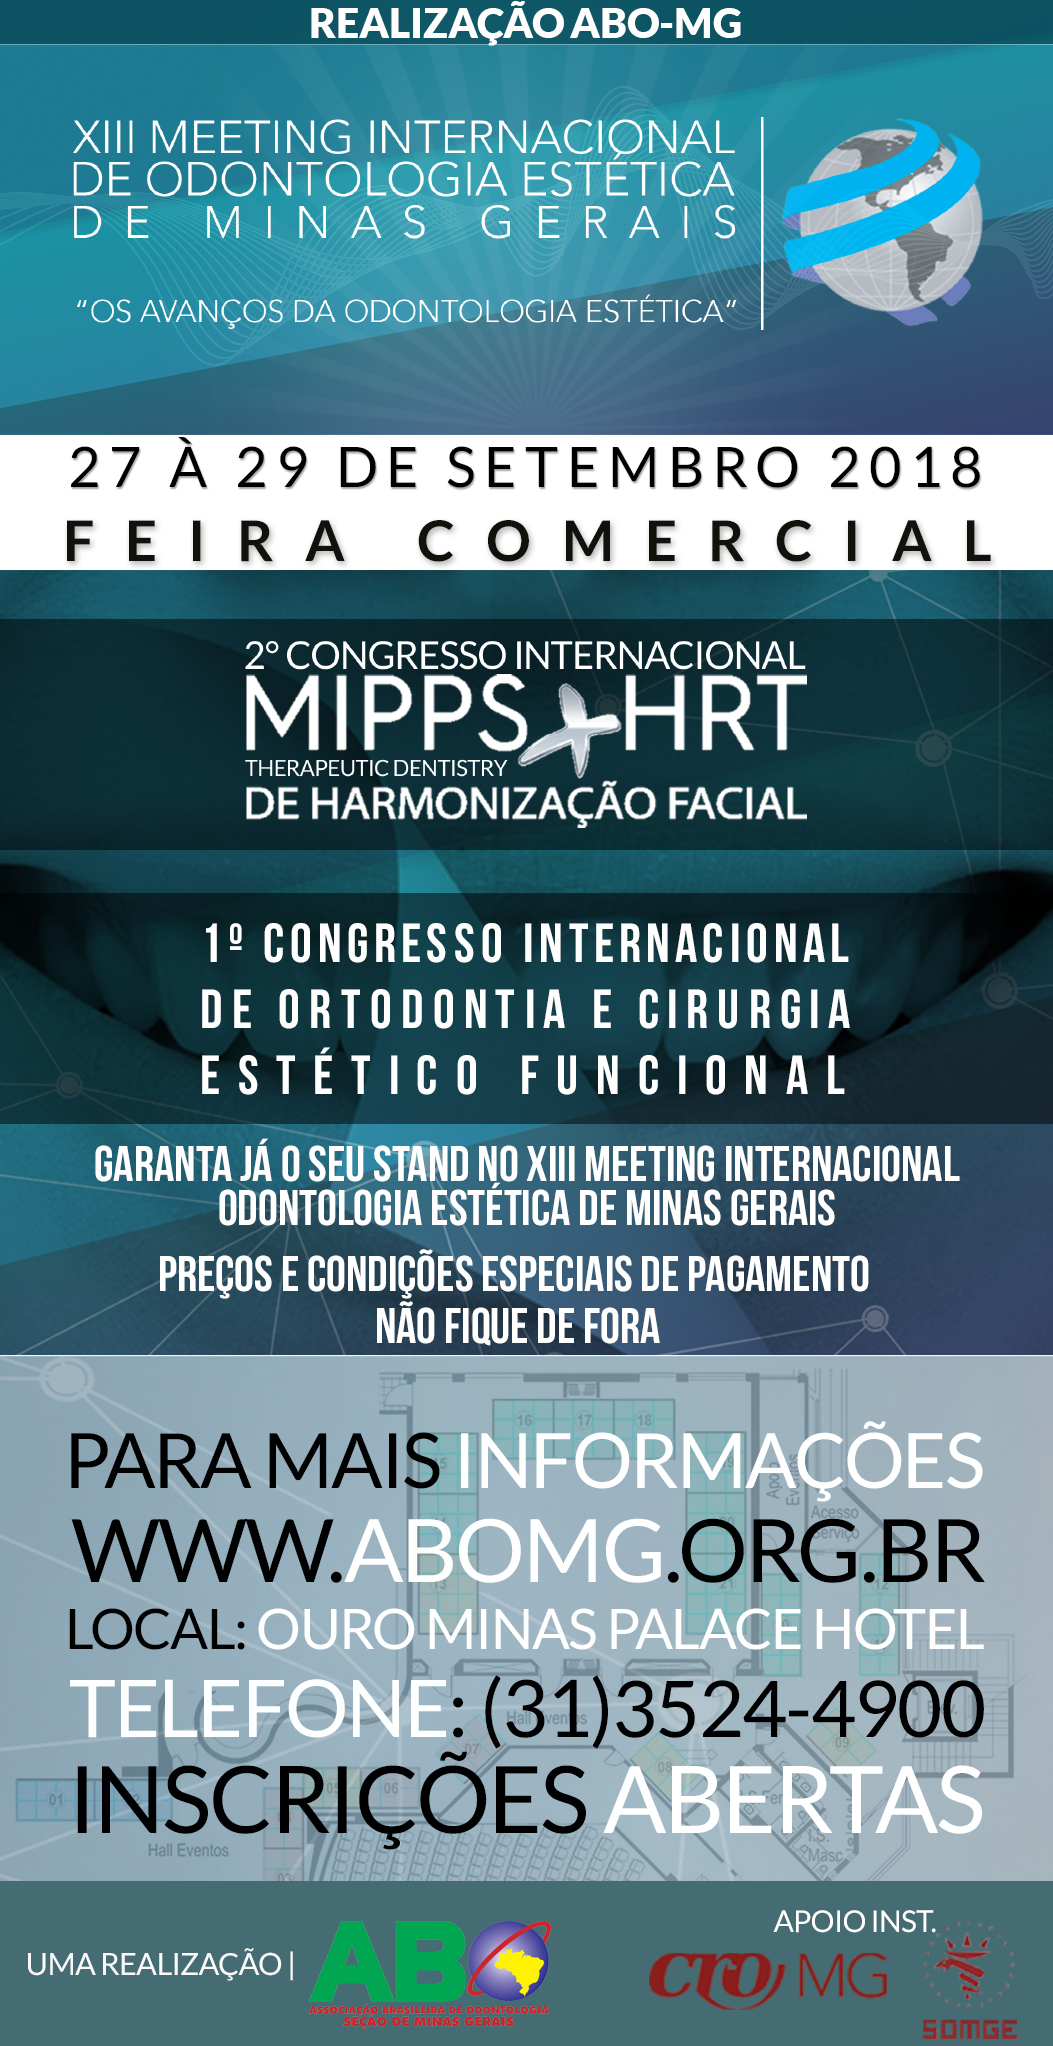 Feira Comercial - XIII Meeting Internacional de Odontologia Estética de Minas Gerais - ABO-MG